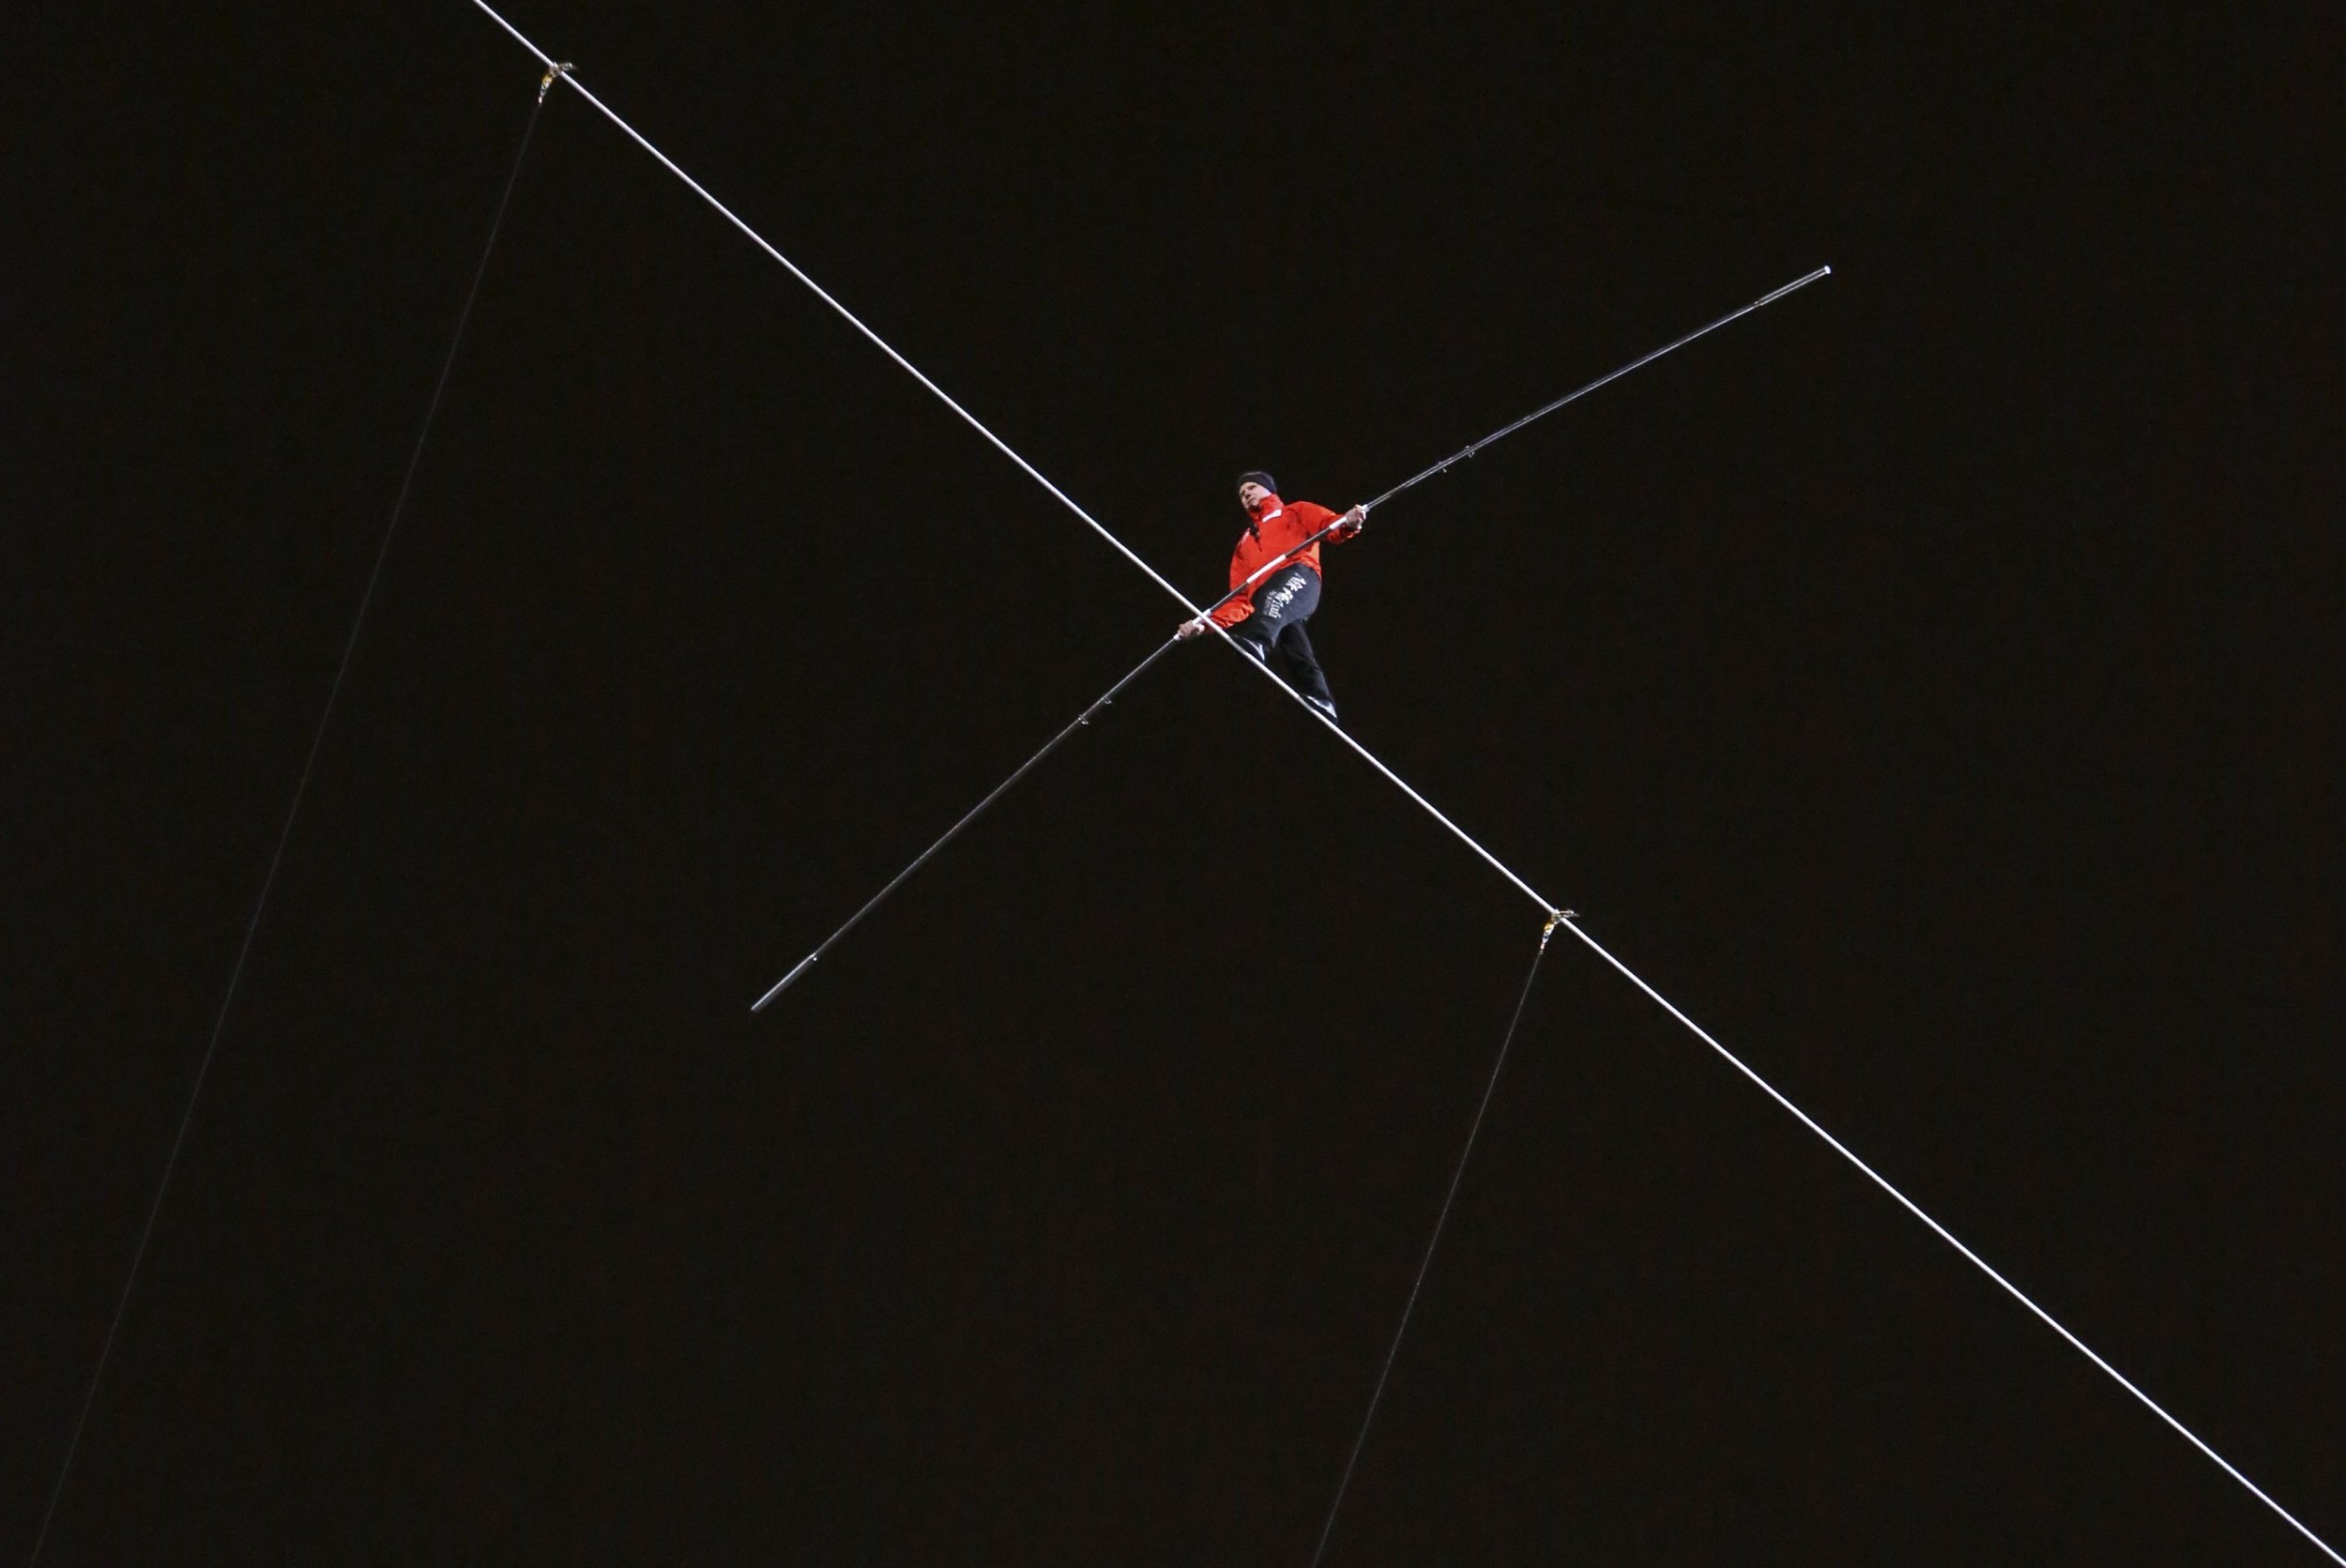 Balancing Act: Televised Record-Setting Tightrope Walks Draw Mixed Reactions